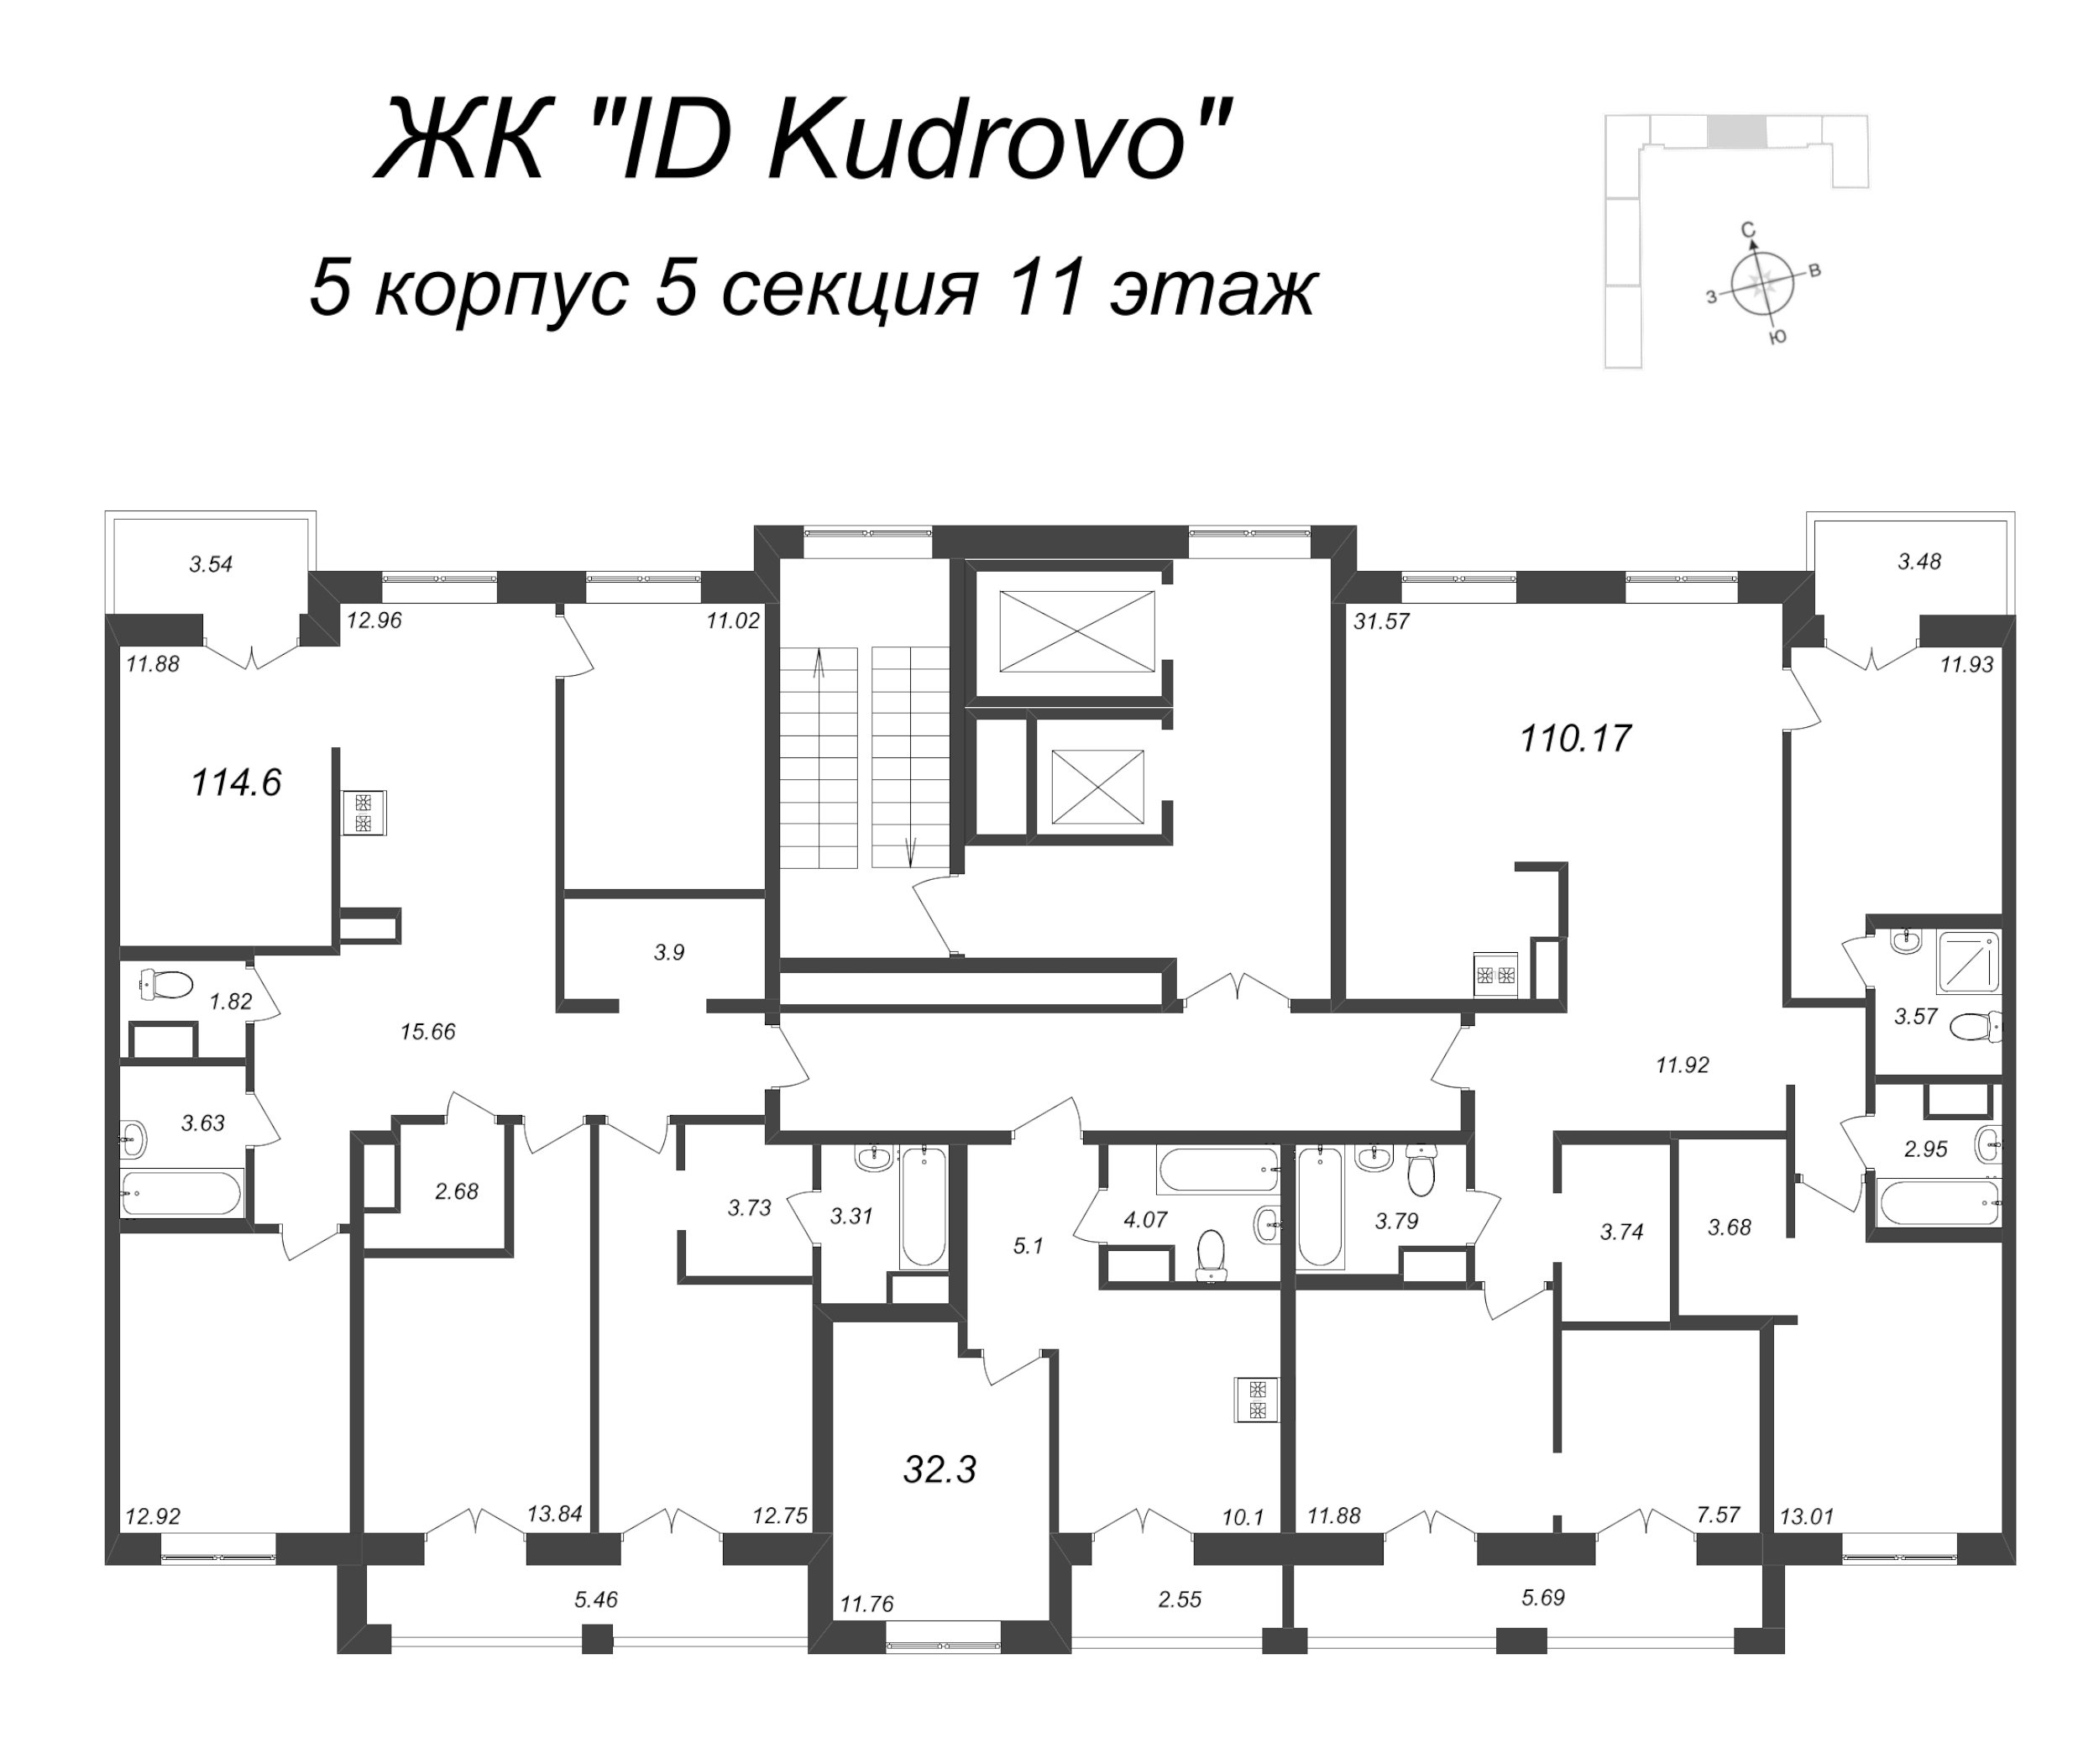 5-комнатная (Евро) квартира, 110.17 м² - планировка этажа